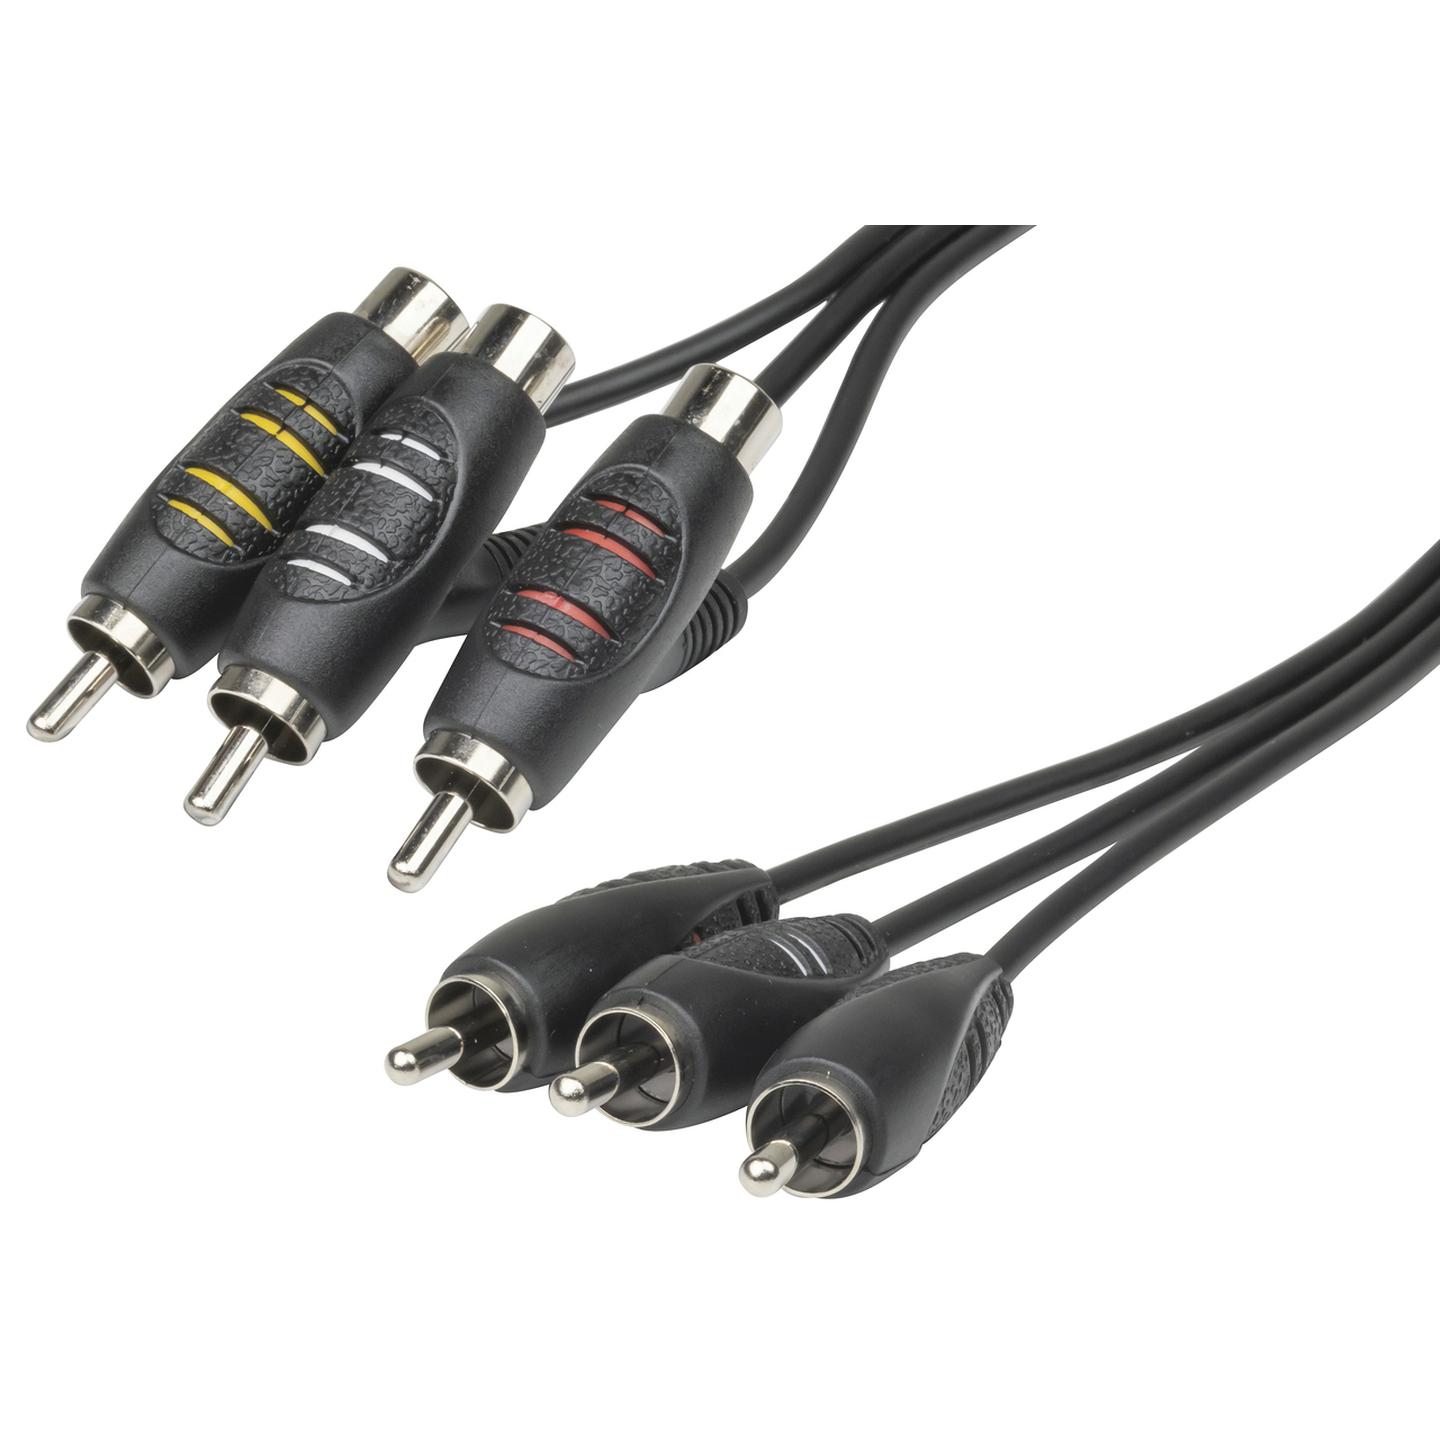 3 x RCA Piggyback Plugs to 3 RCA Plugs - 1.5m